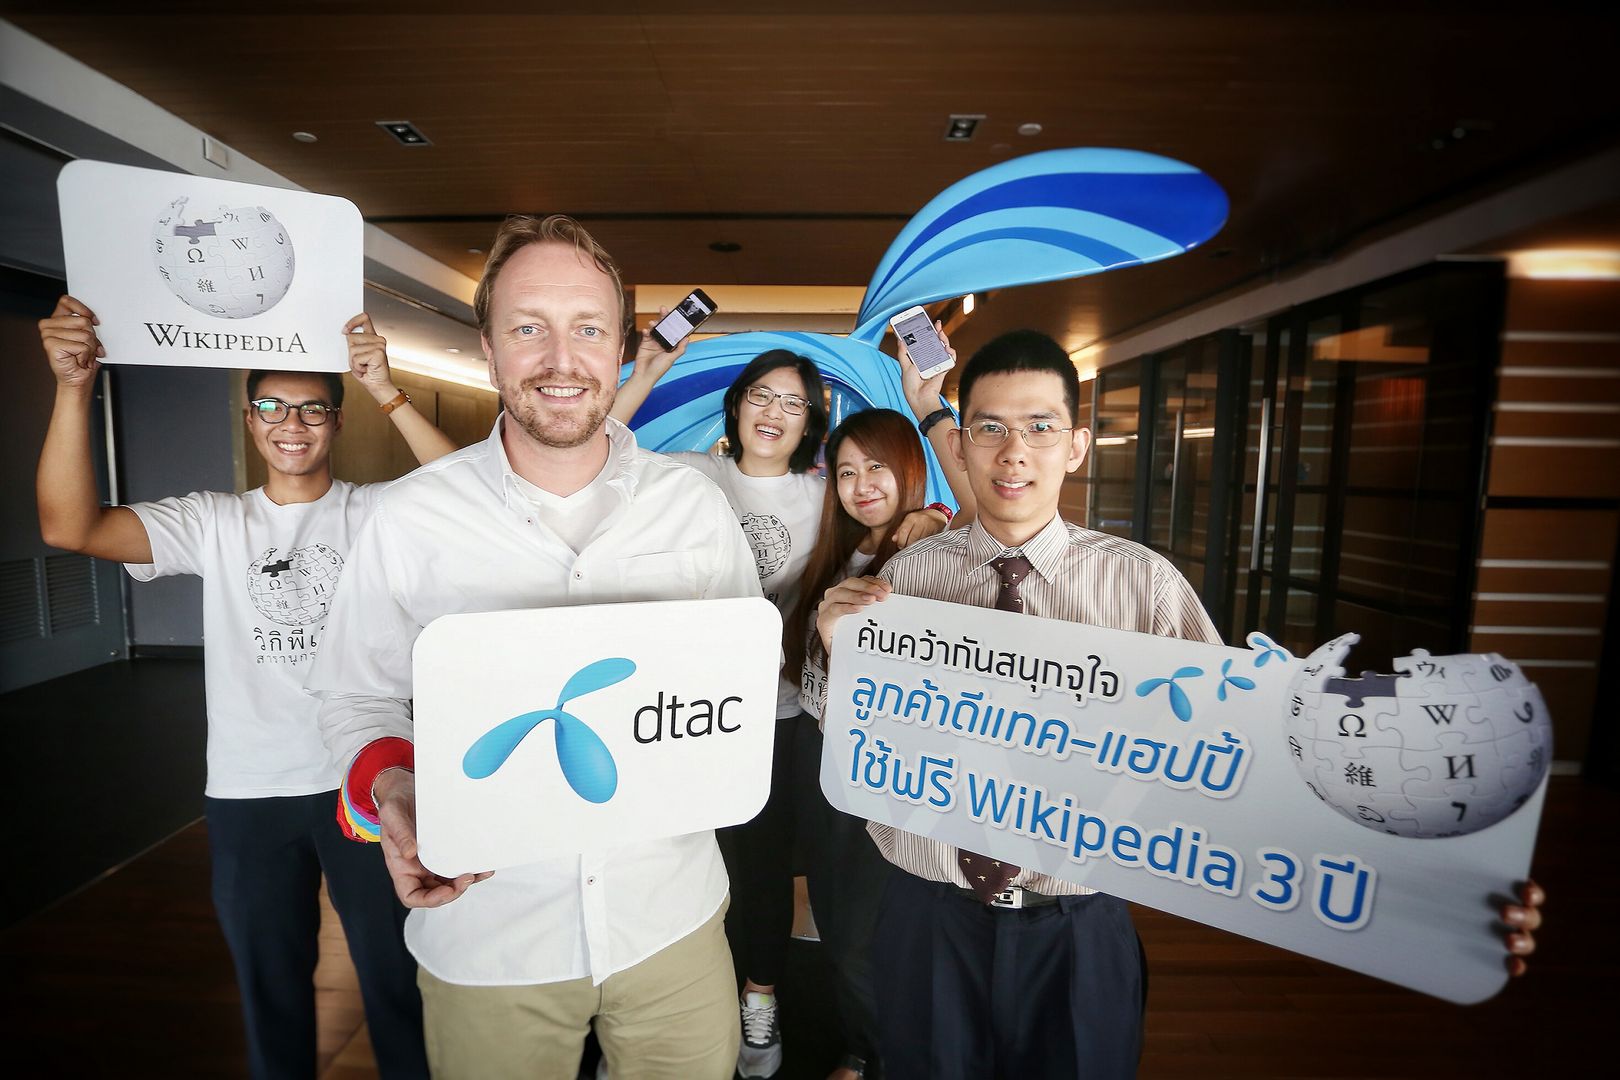 dtac ให้คนไทยใช้ Wikipedia ผ่านมือถือฟรี 3 ปี